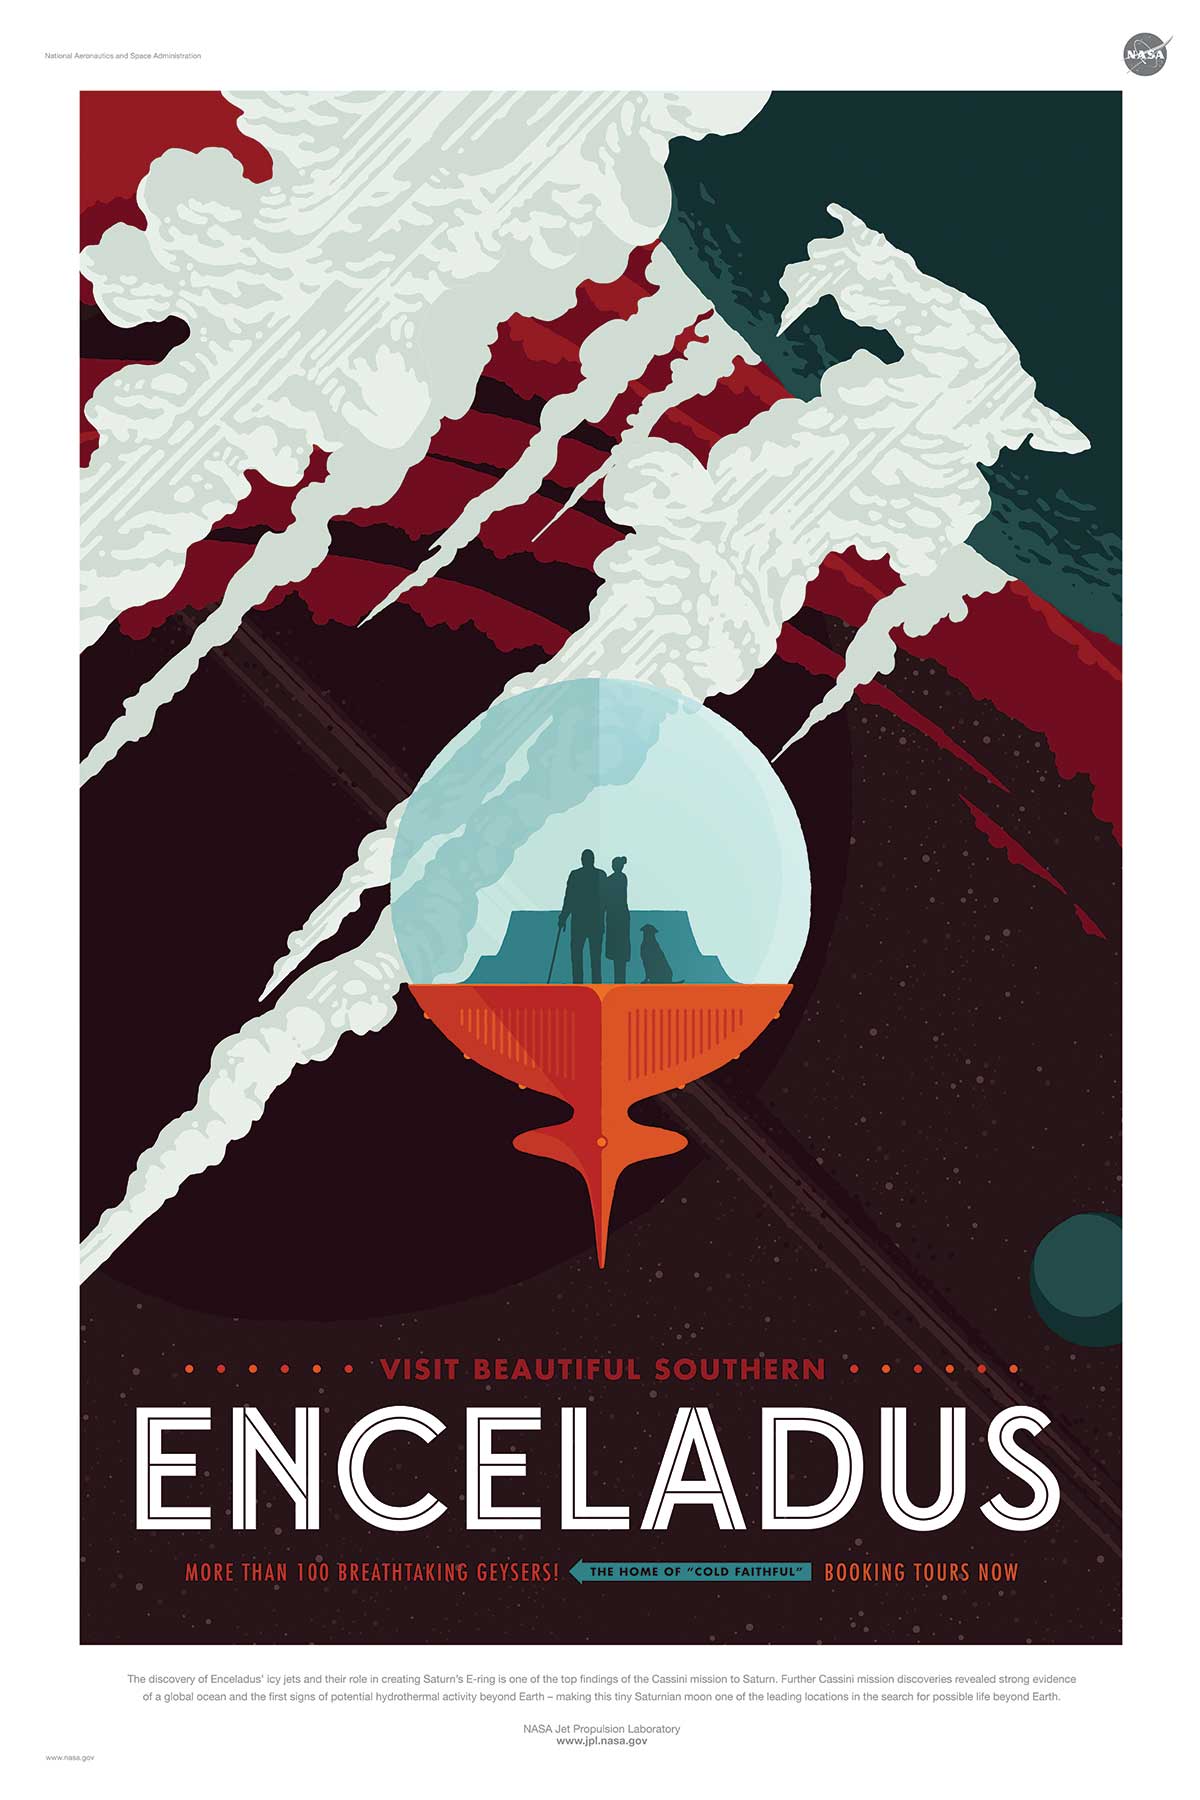 NASA poster promoting space travel to Enceladus